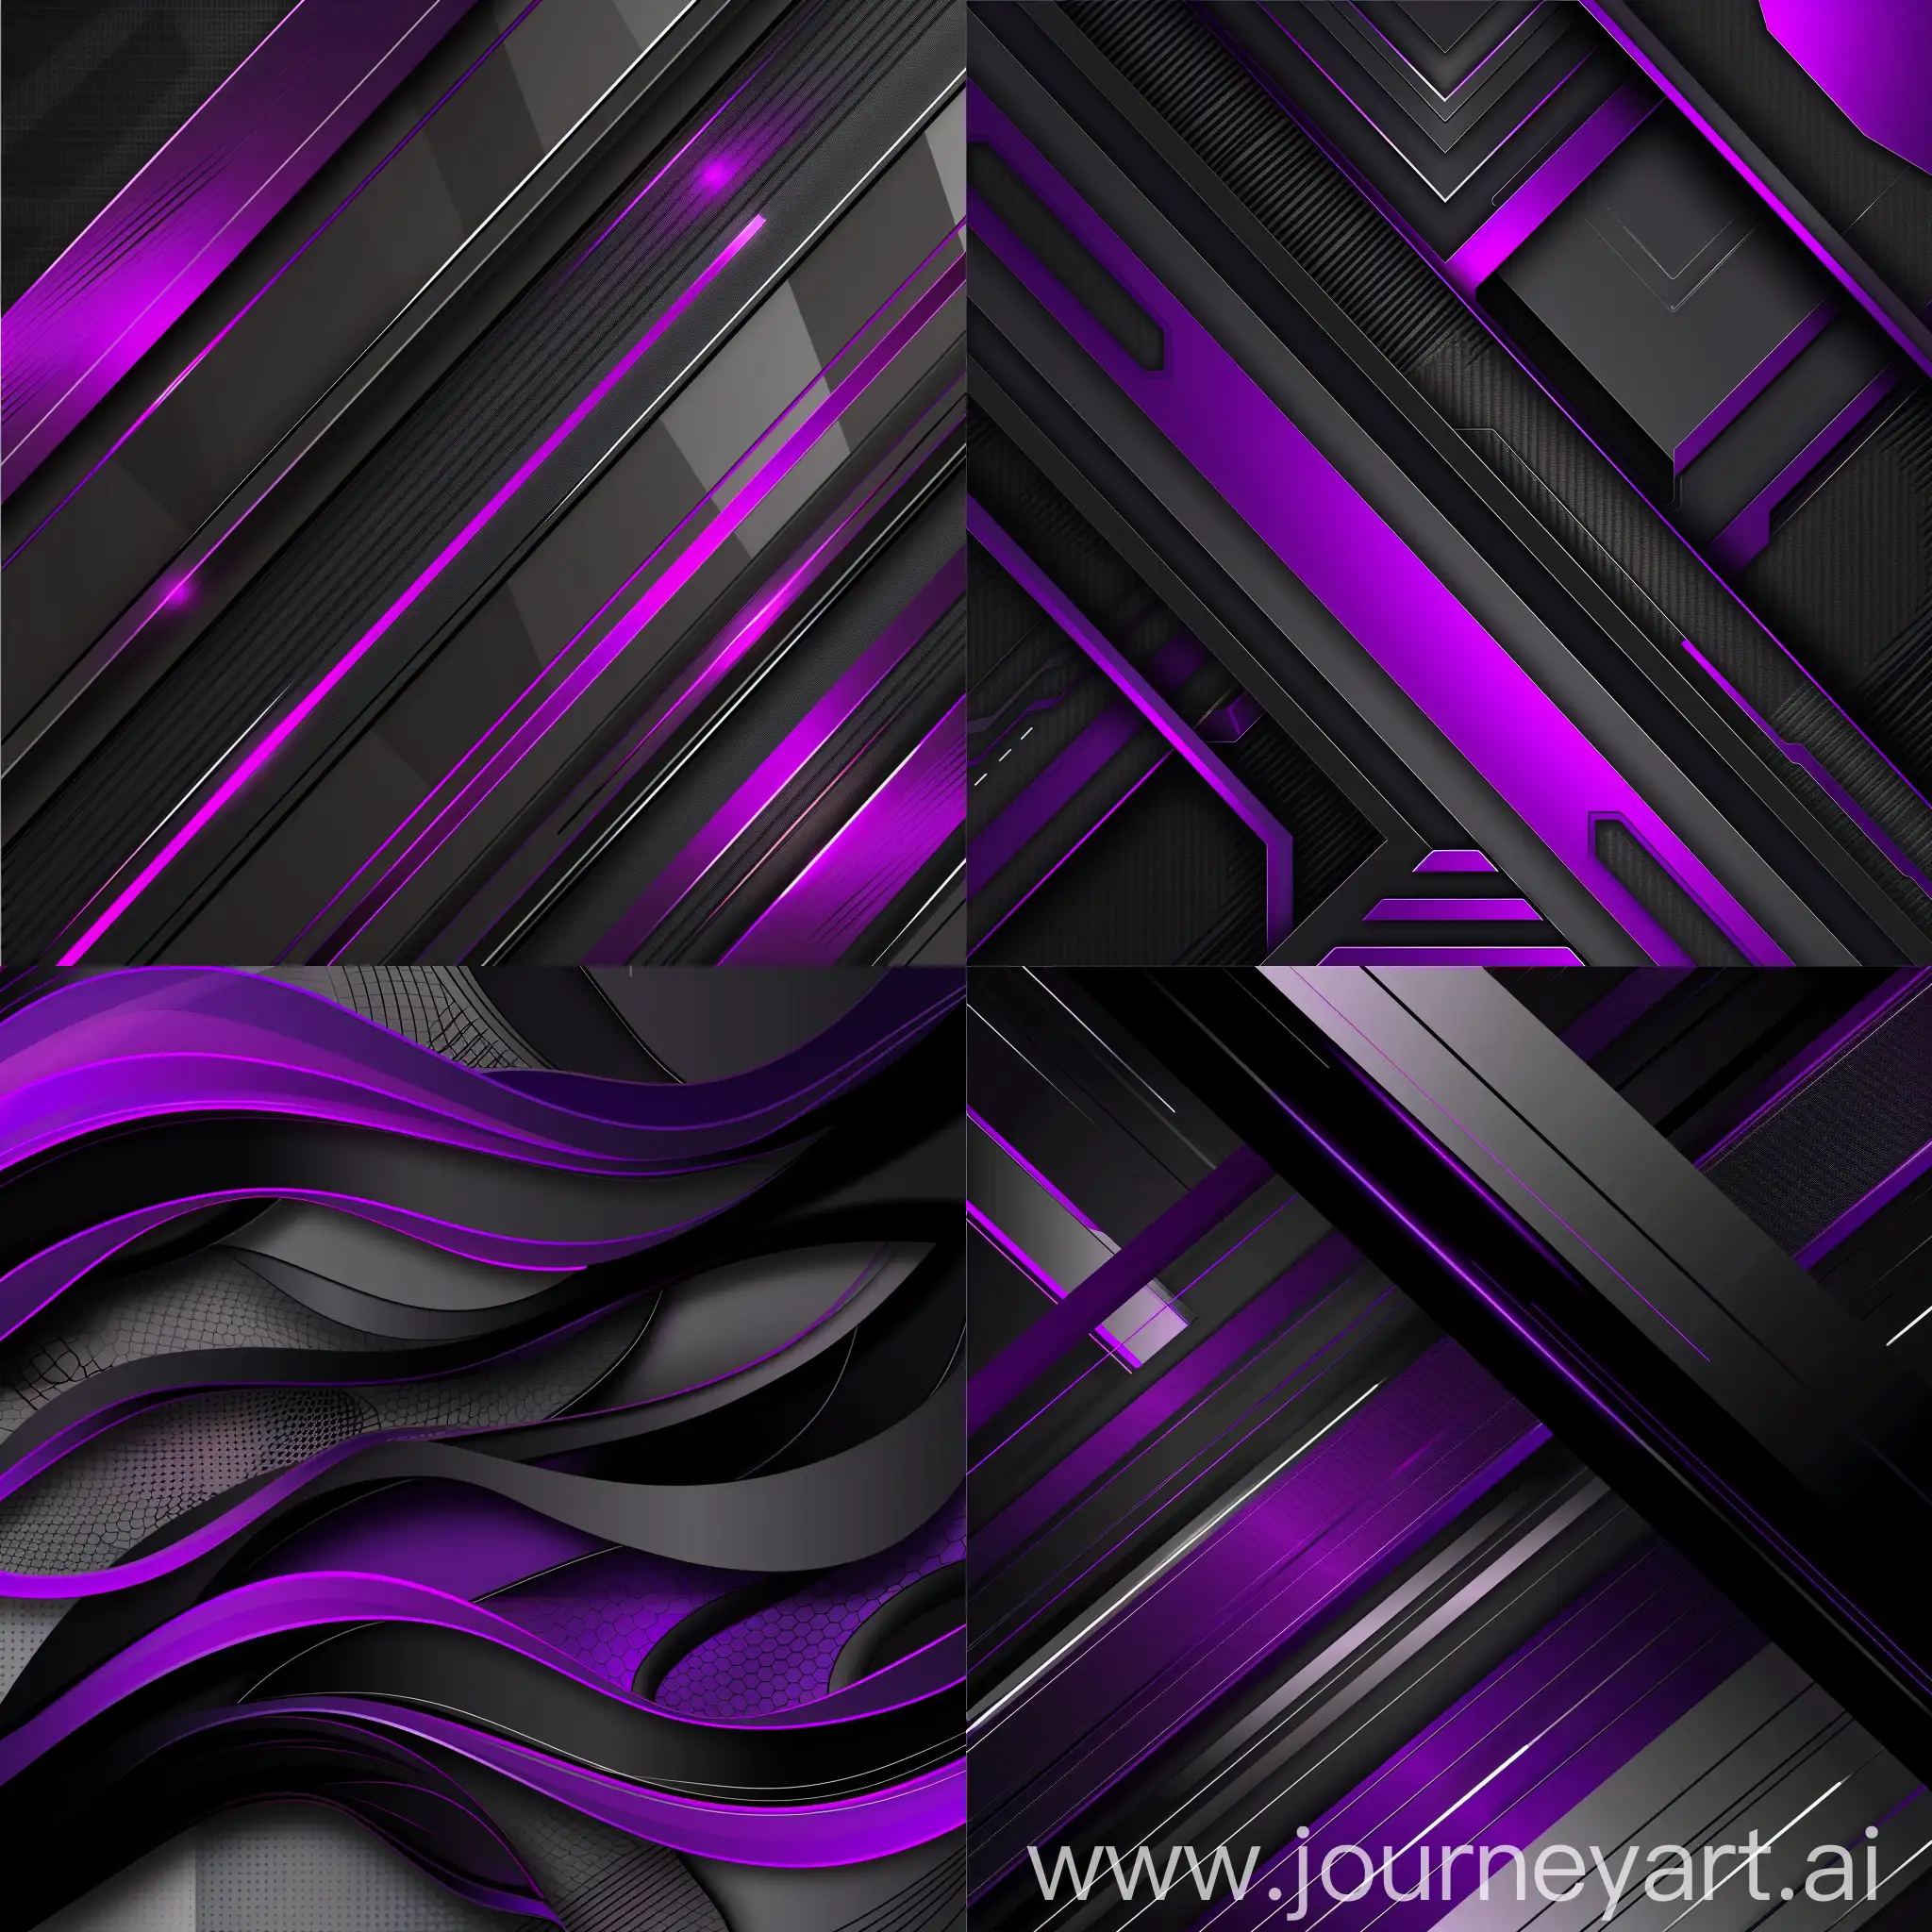 Vibrant-CS2-Theme-in-Neon-Purple-Gray-and-Black